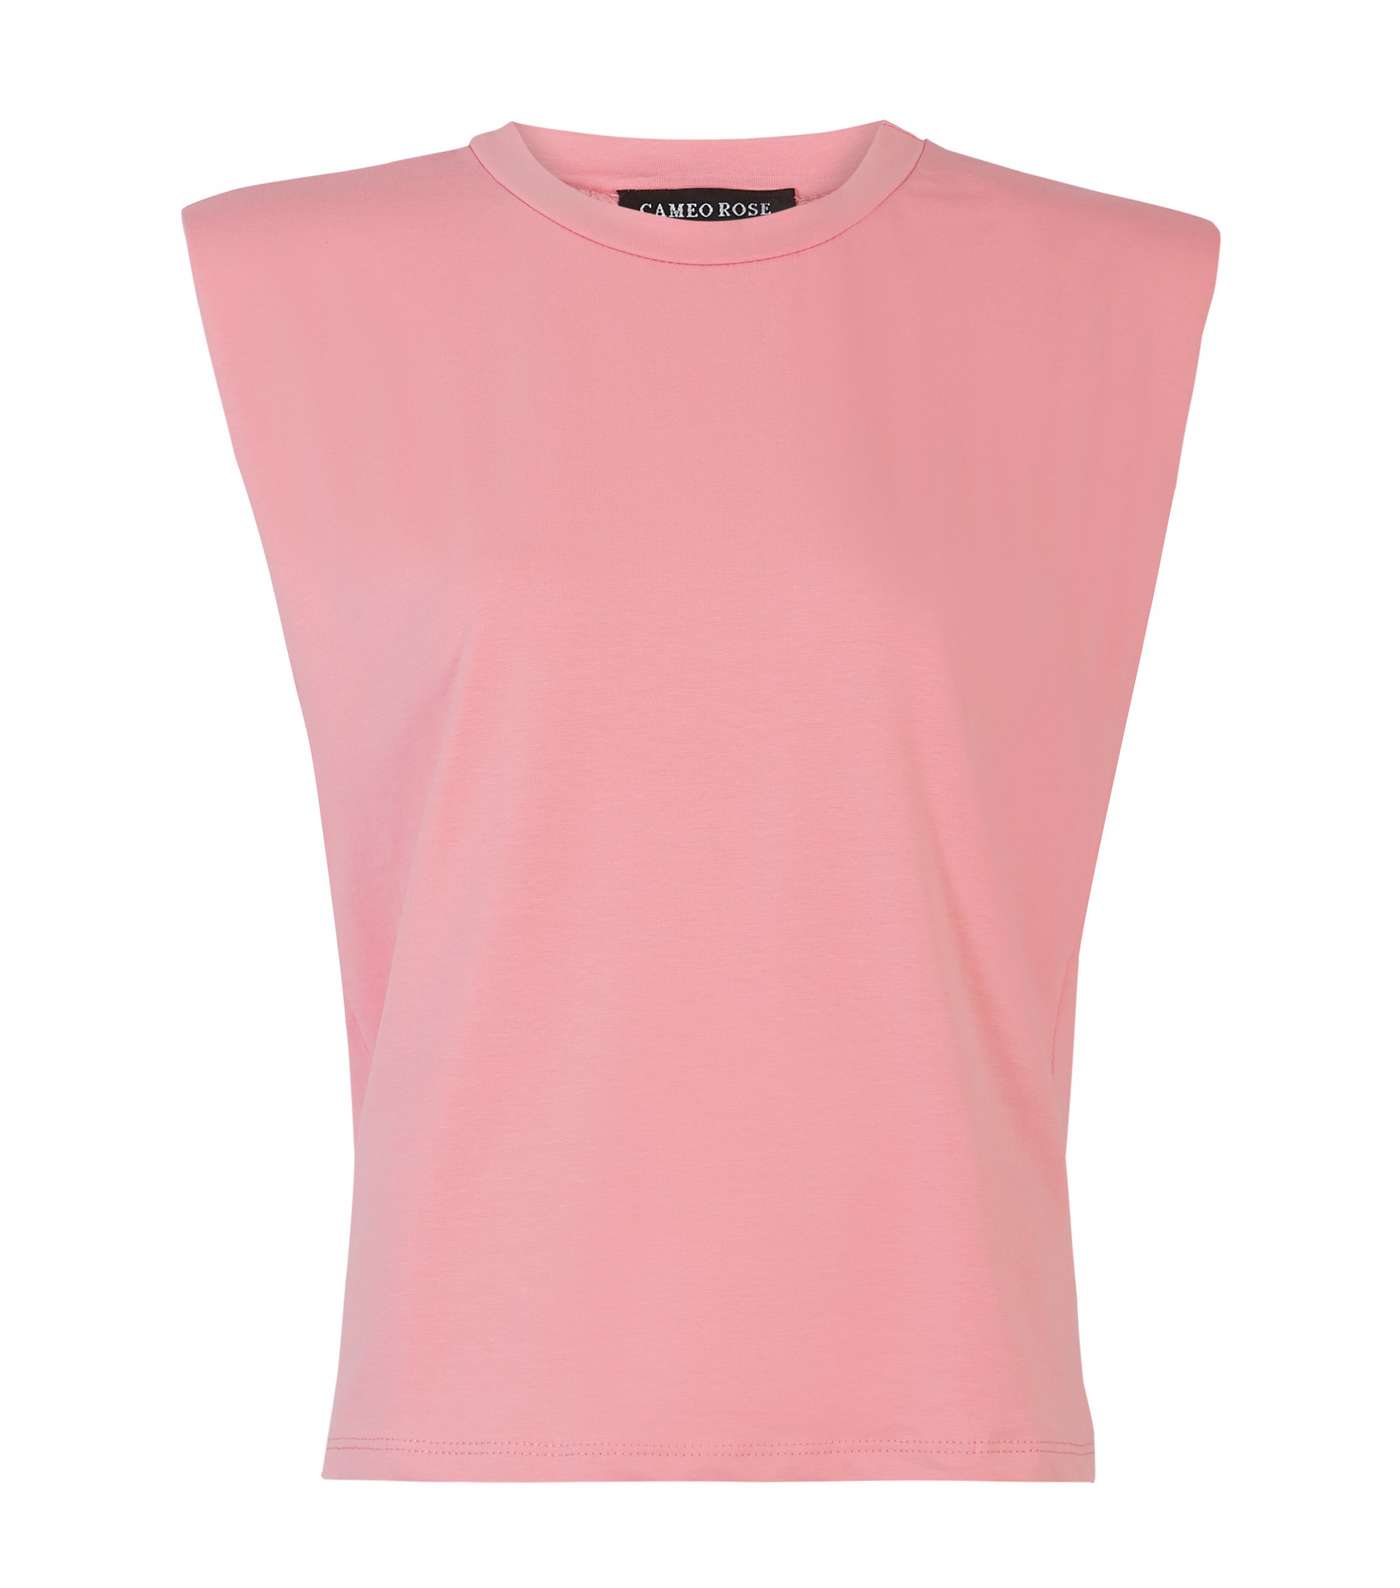 Cameo Rose Pink Shoulder Pad Sleeveless T-Shirt